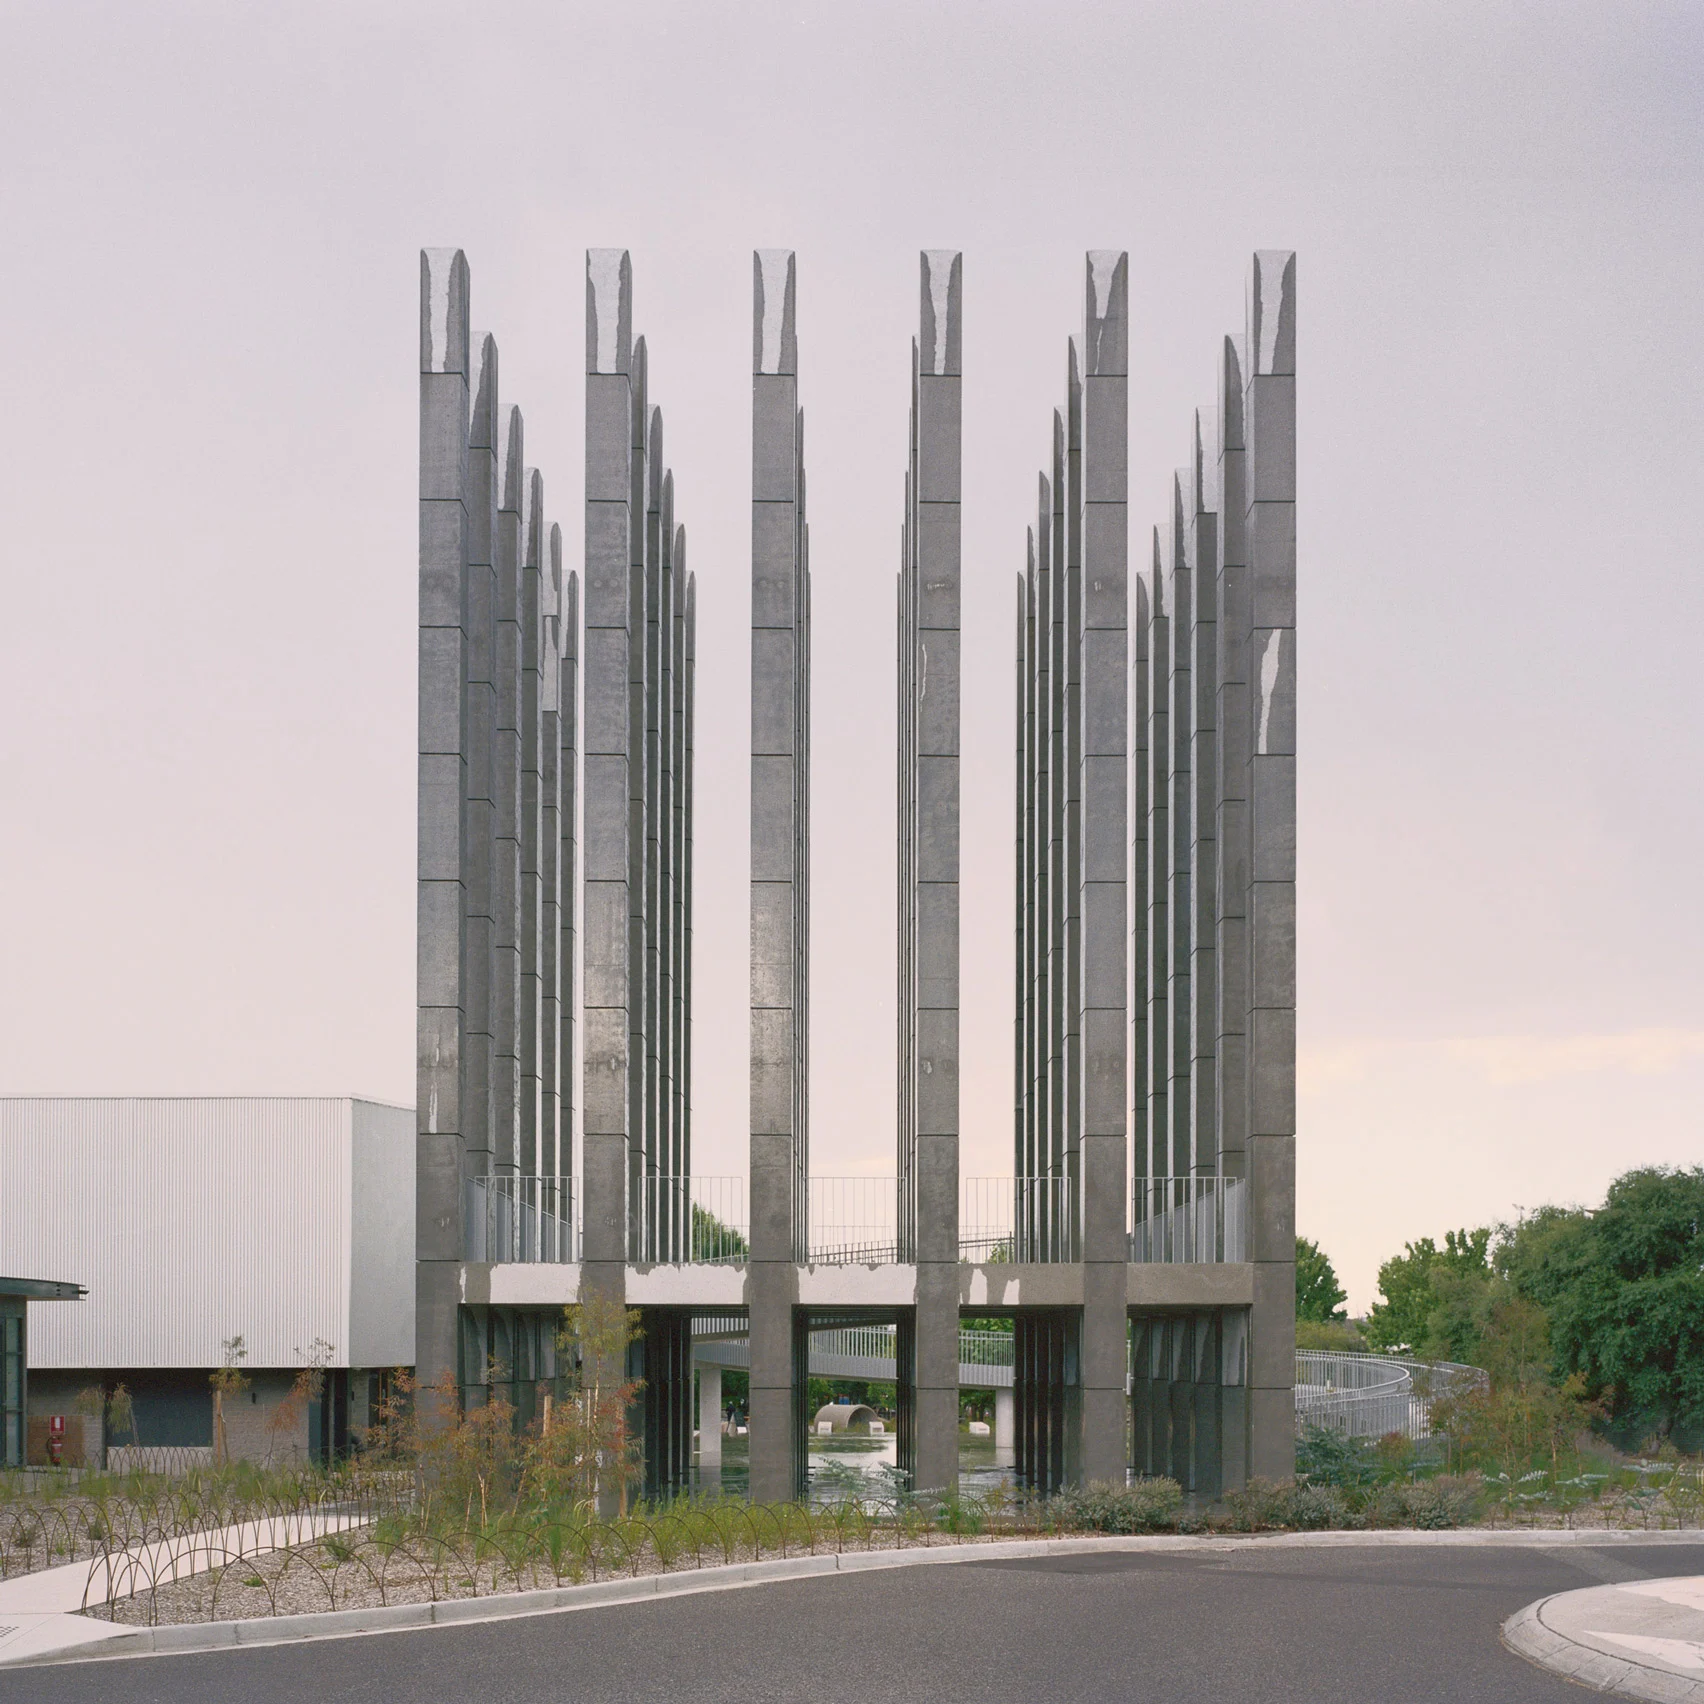 Brutalism: Το πιο “σκληρό” αρχιτεκτονικό στυλ που έγραψε ιστορία, επιστρέφει δυναμικά